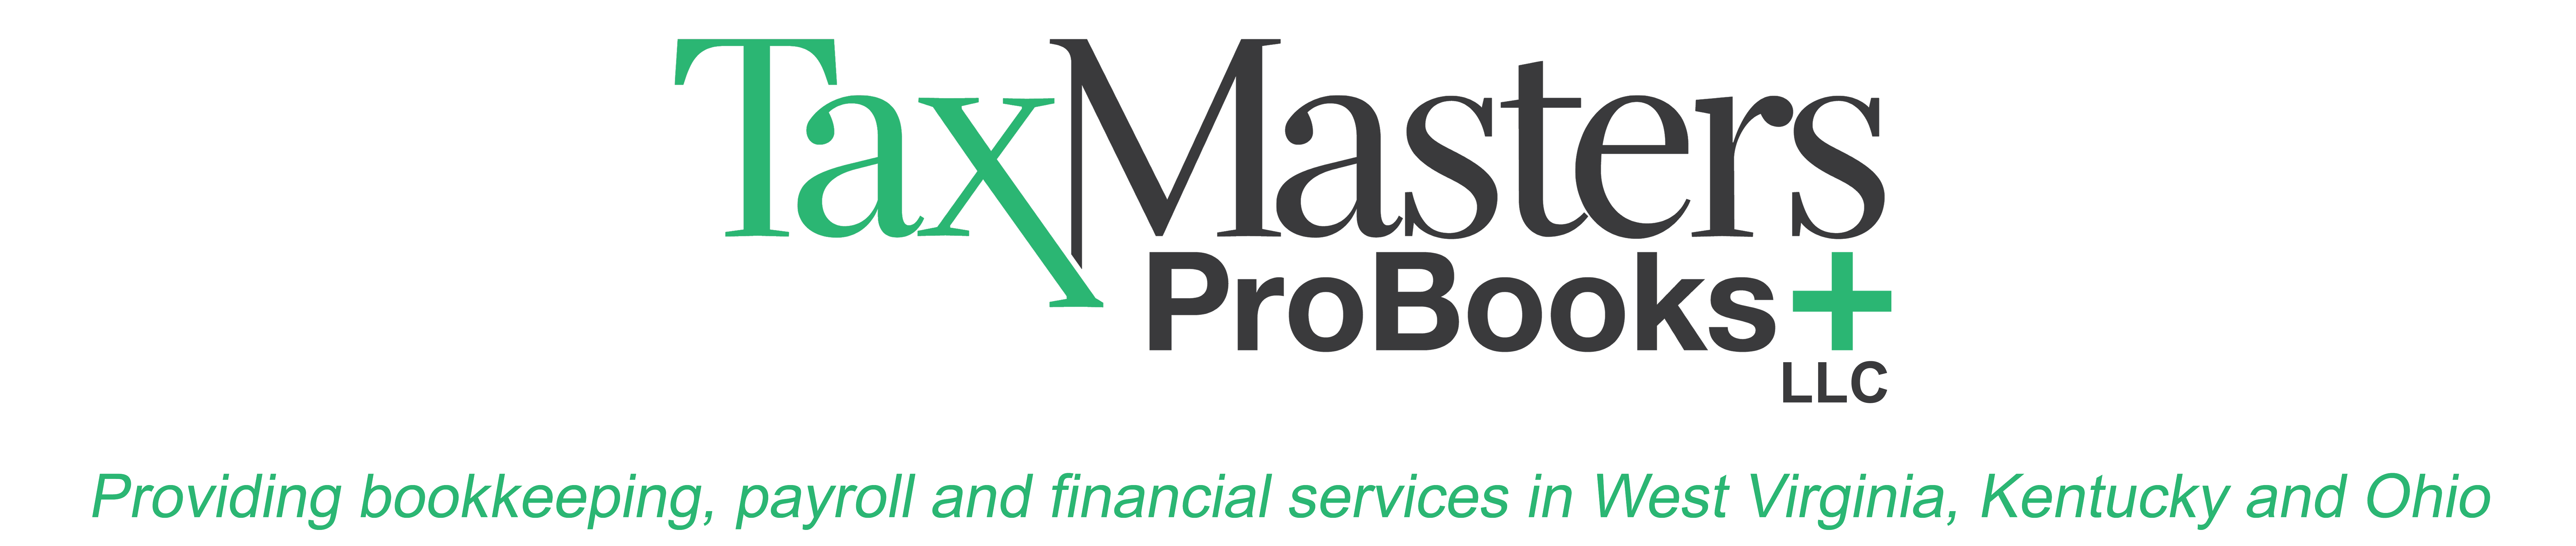 Tax Masters ProBooks+ logo